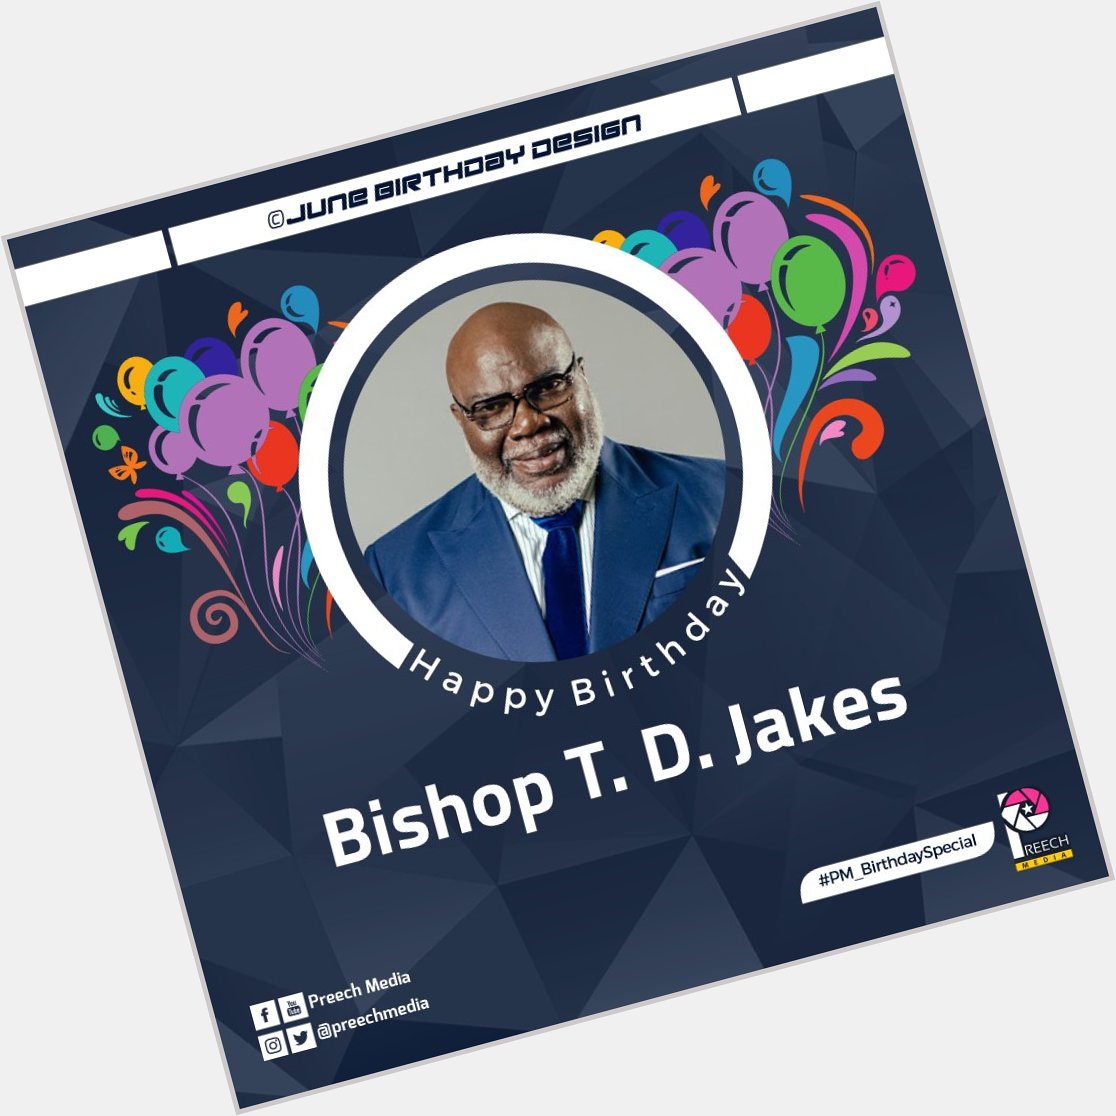 Happy birthday Bishop T. D. Jakes  